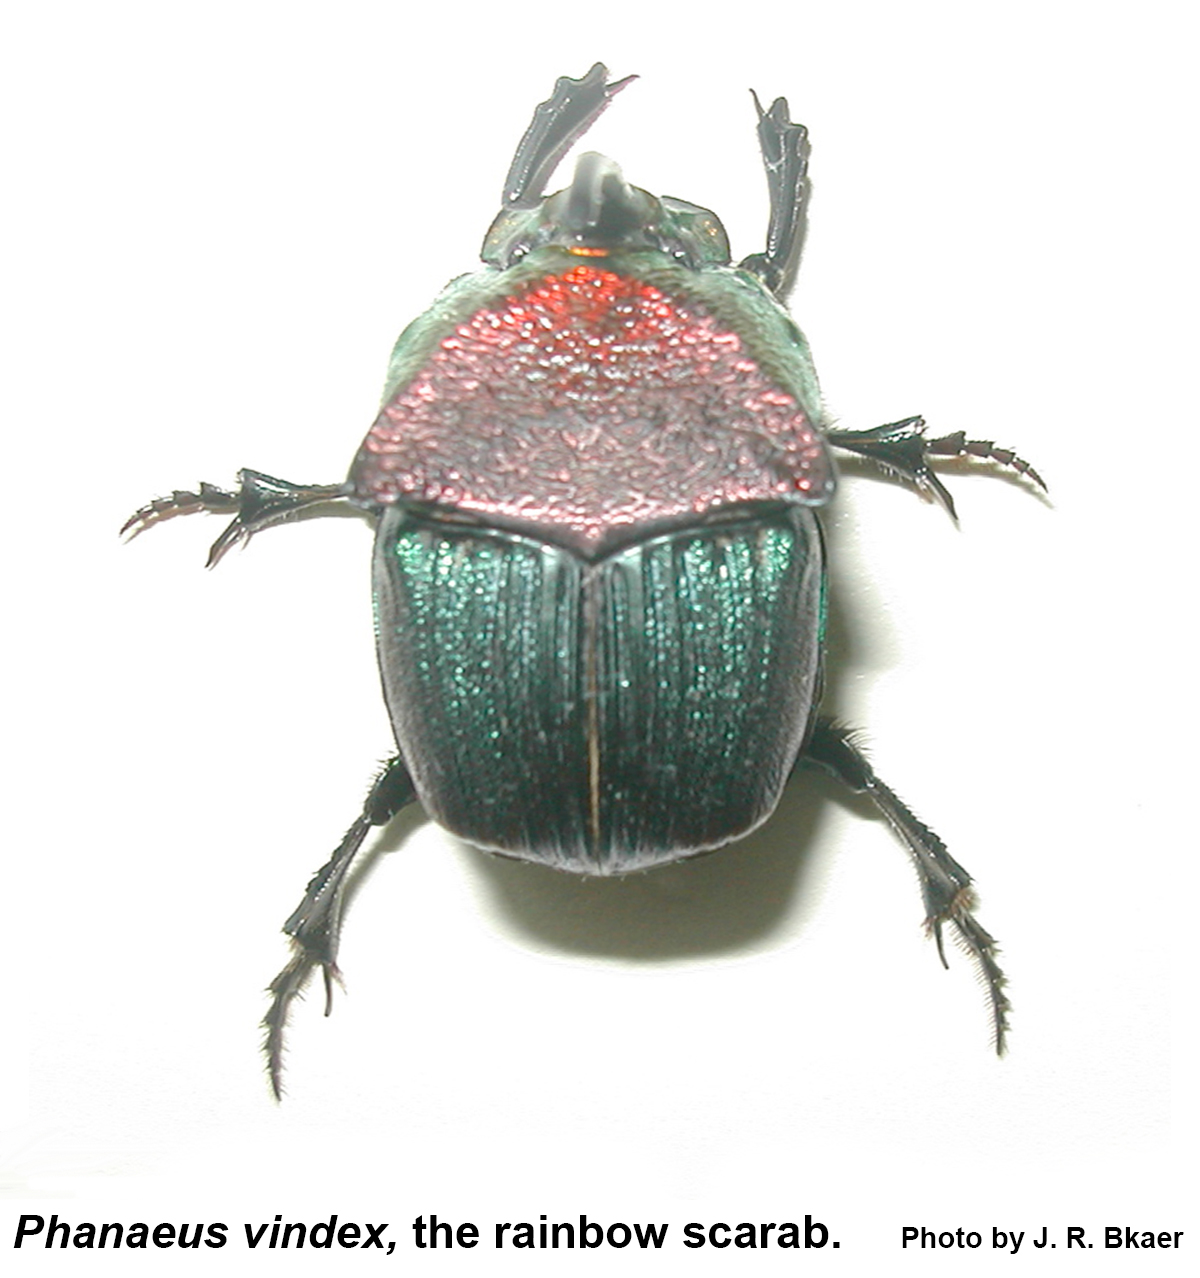  rainbow scarab